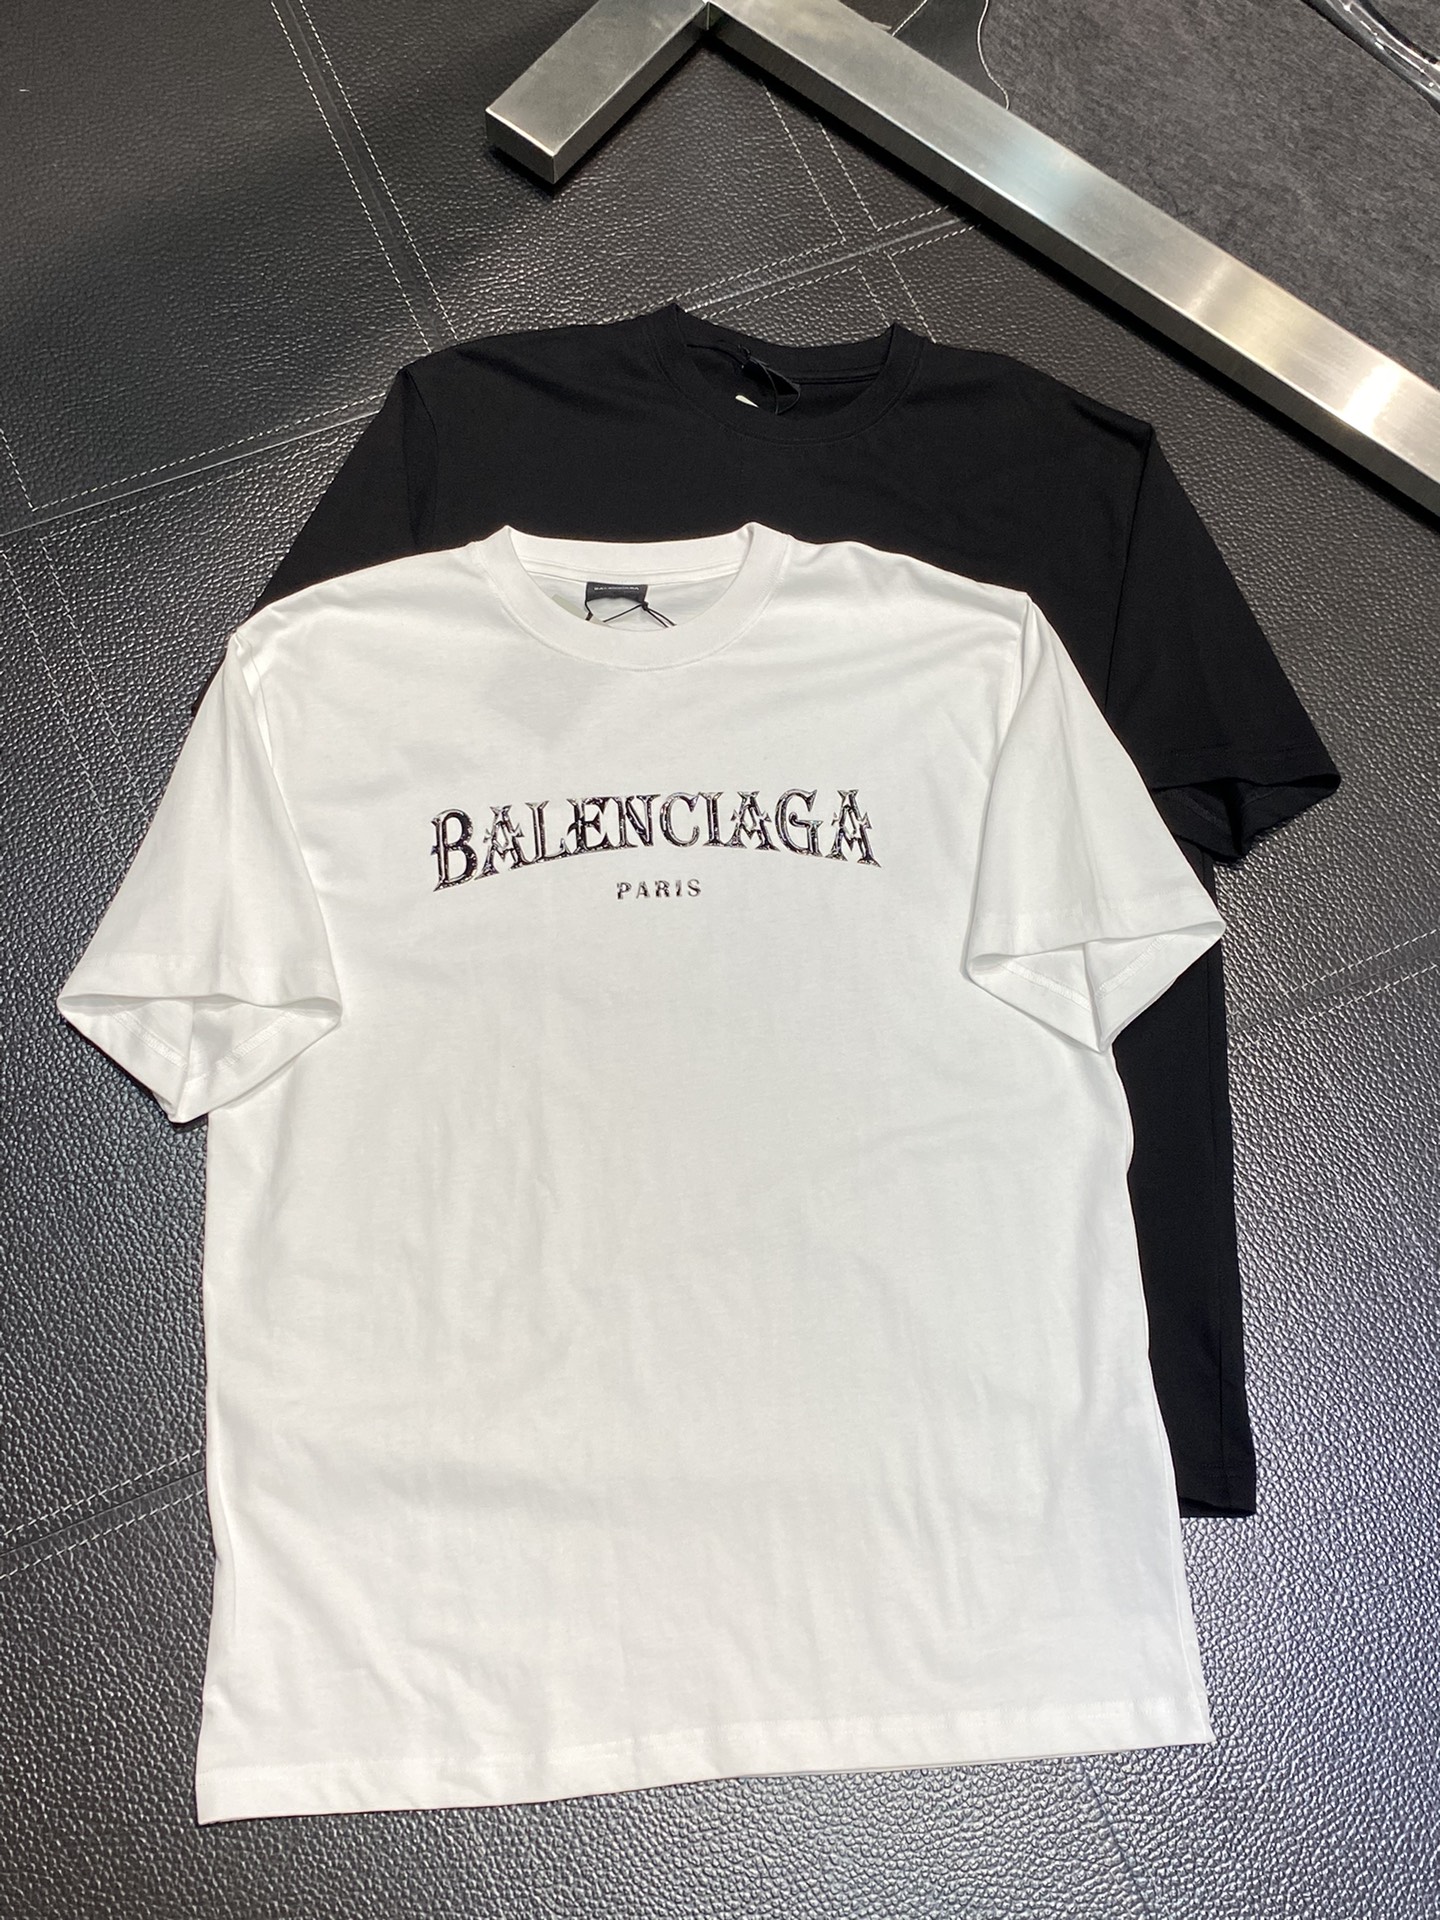 Buy Top High quality Replica
 Balenciaga Clothing T-Shirt Men Fashion Short Sleeve